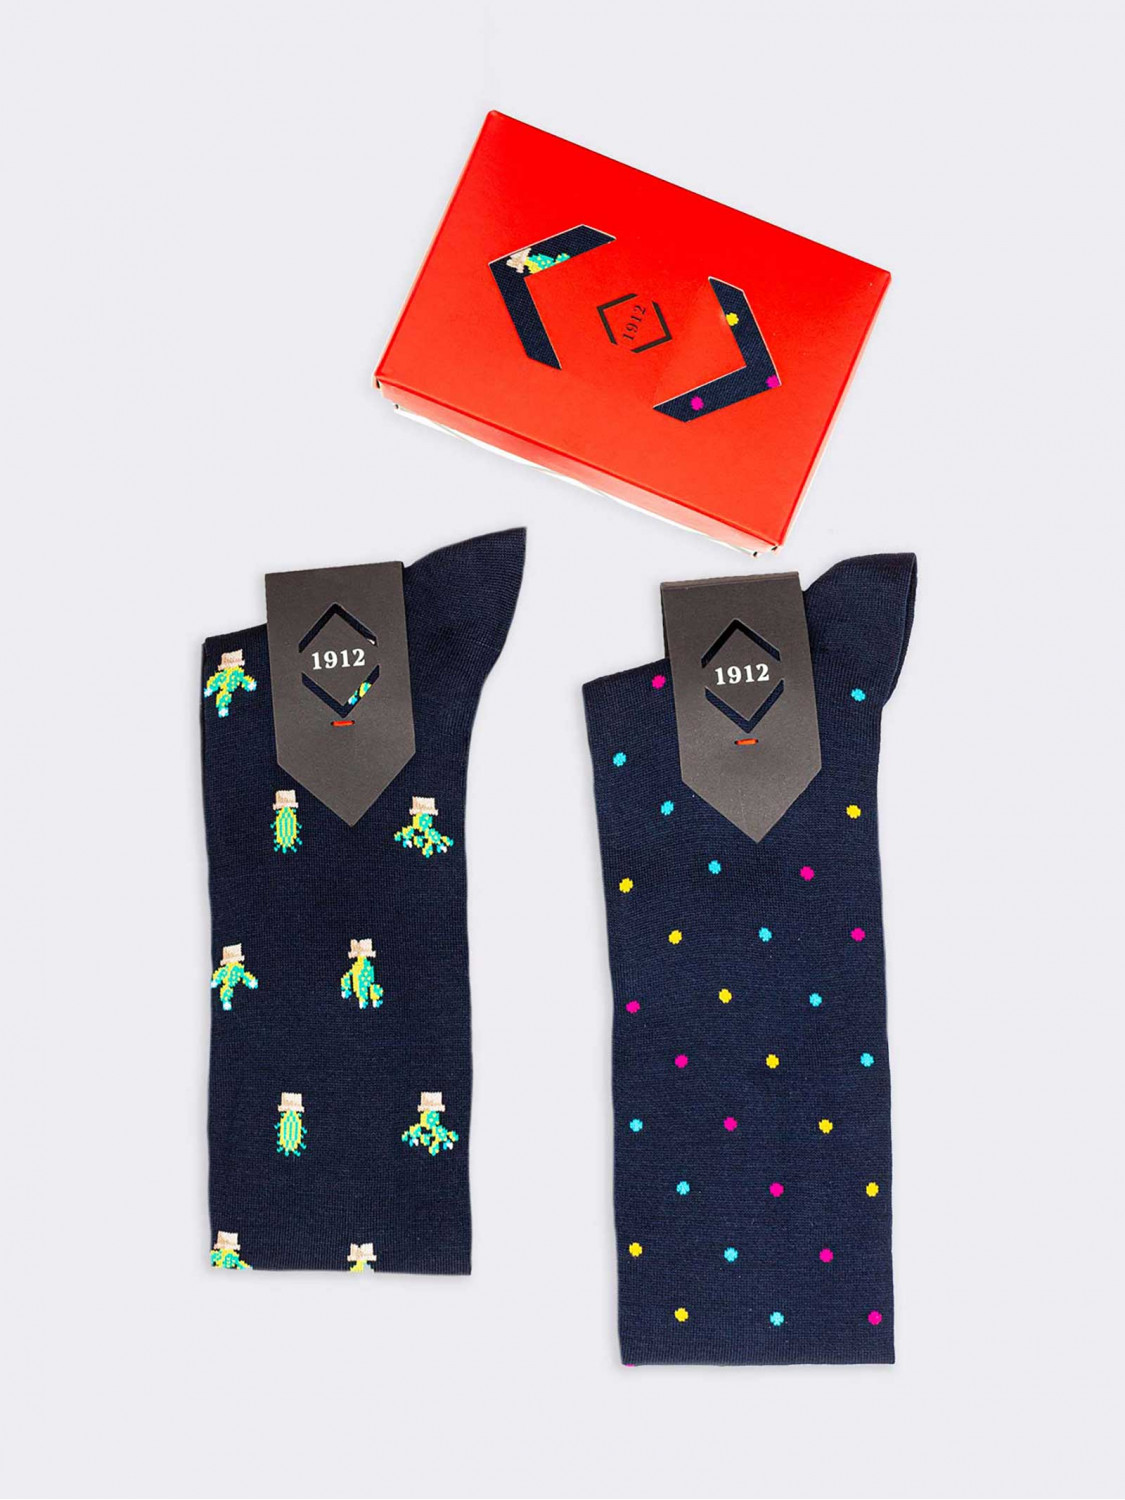 2 Pairs gift Box pattern Men's Knee High socks